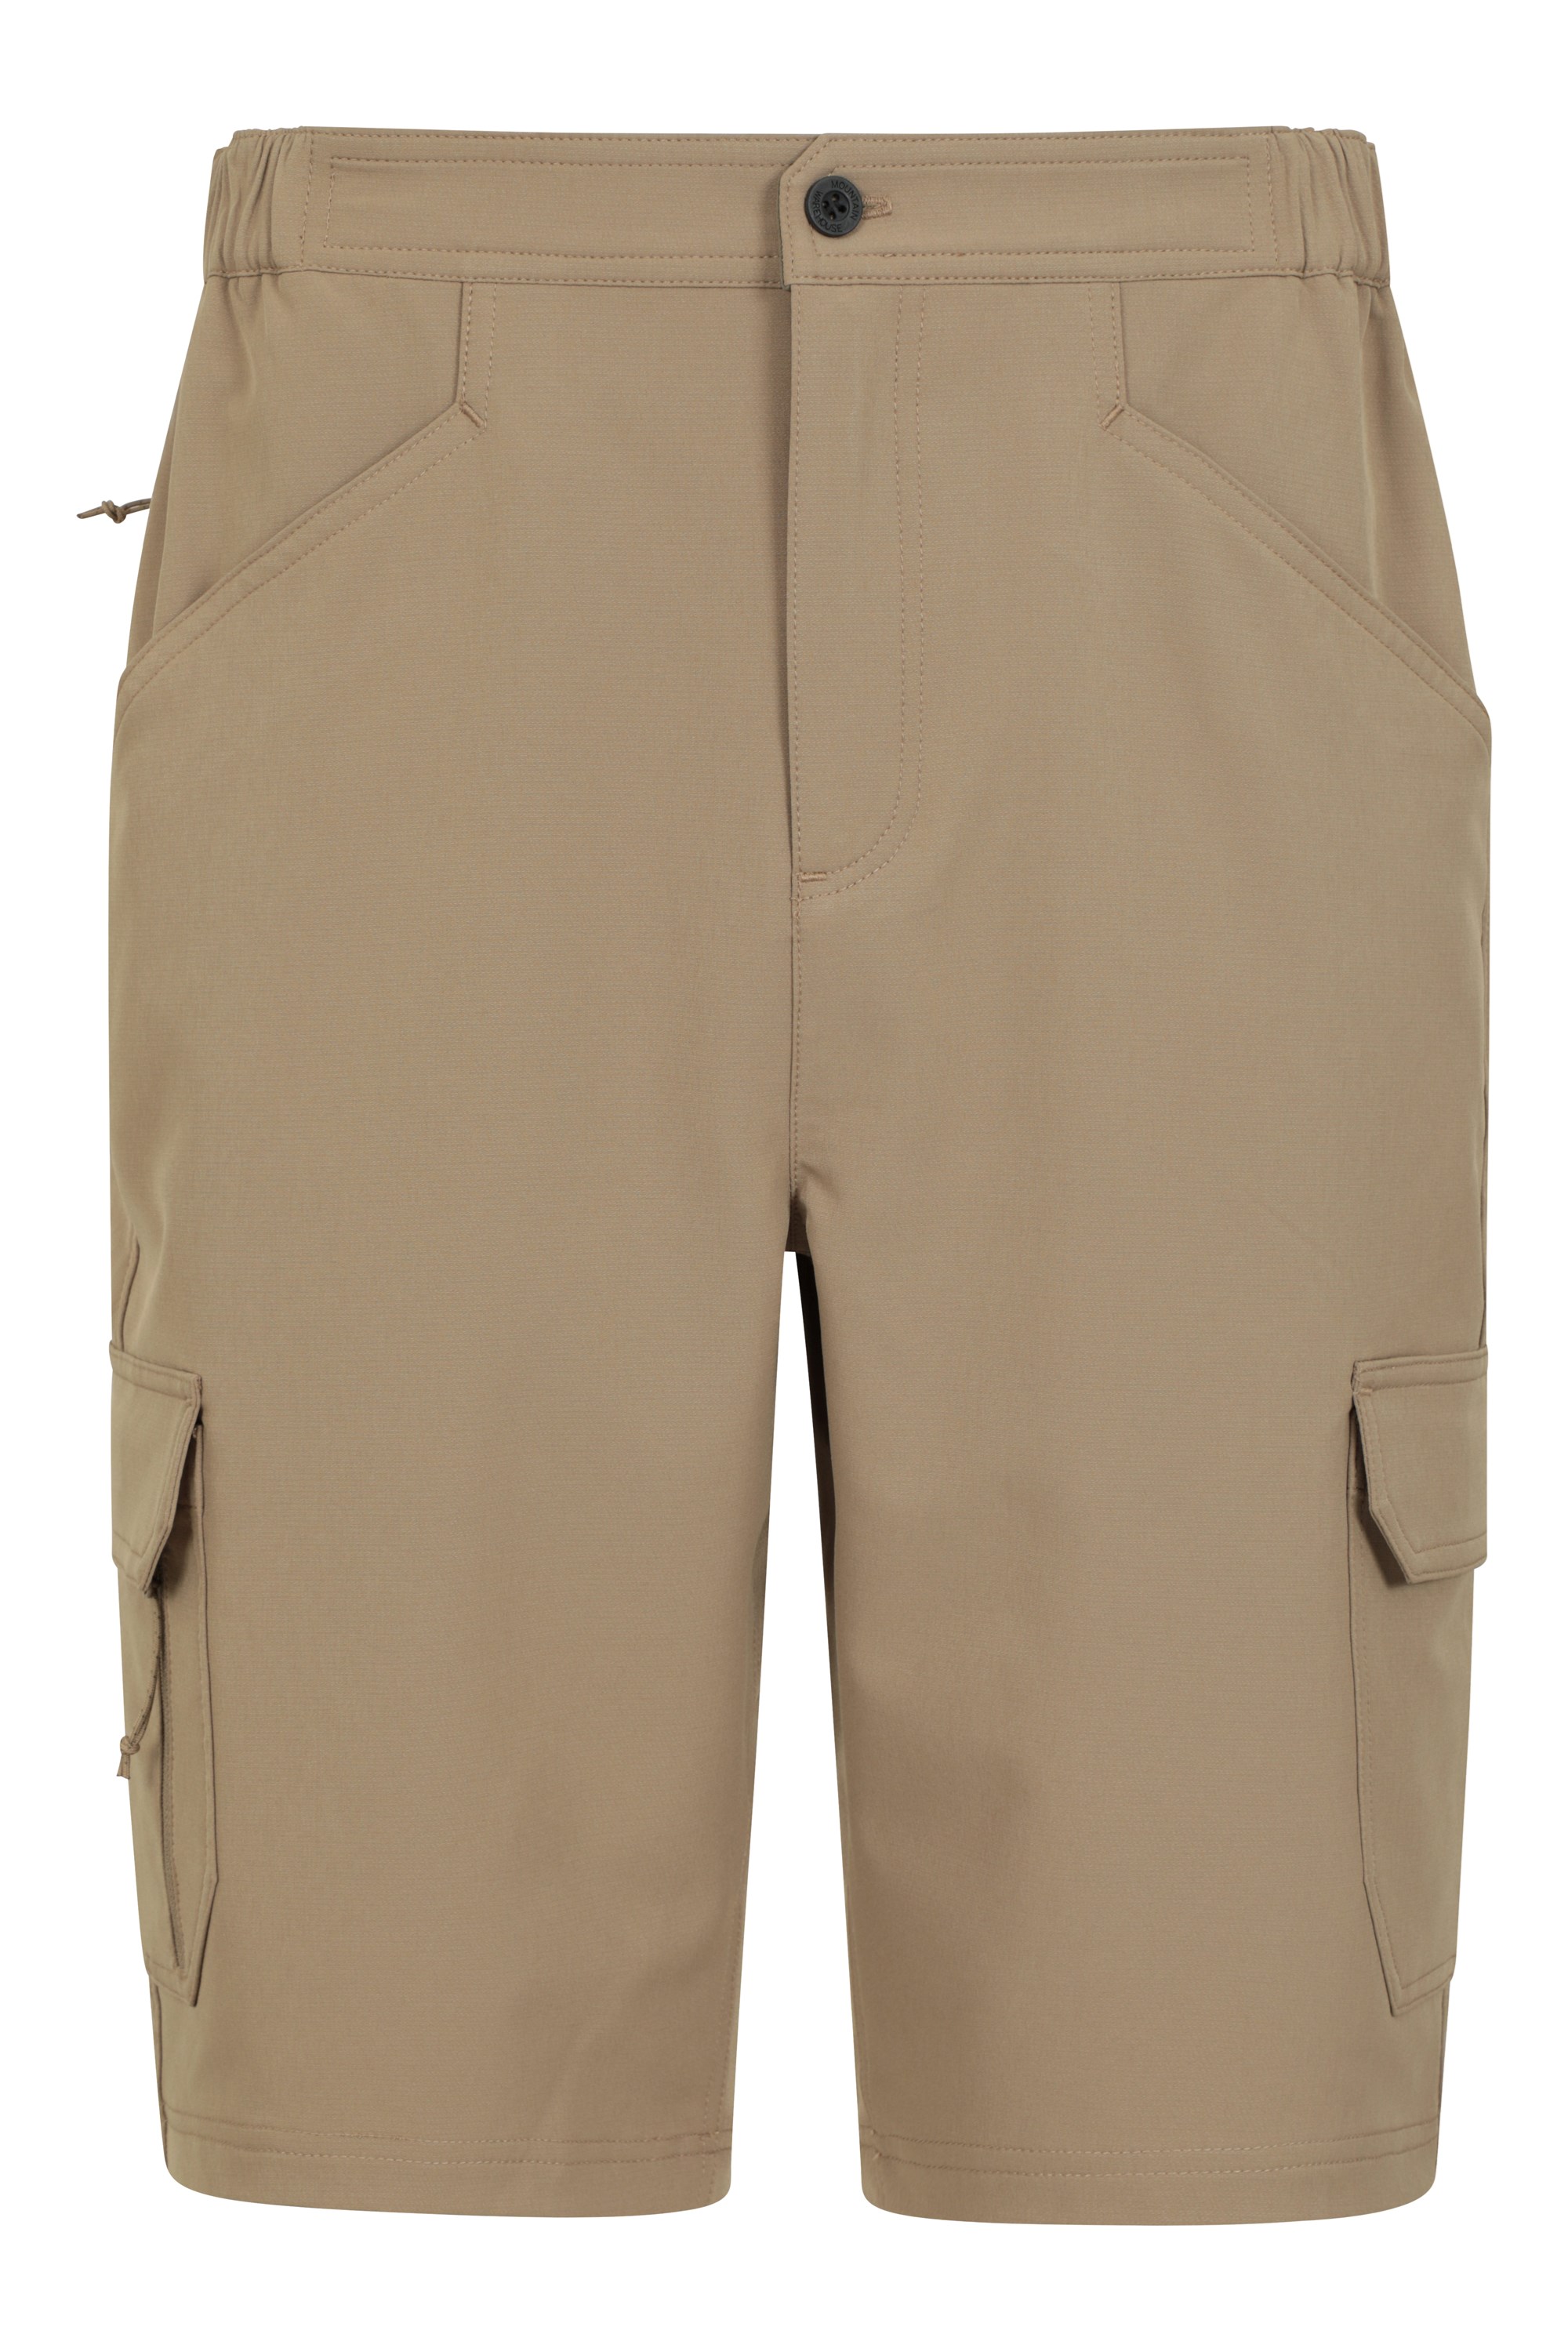 Steve Backshall Pursuit Mens Shorts | Mountain Warehouse GB